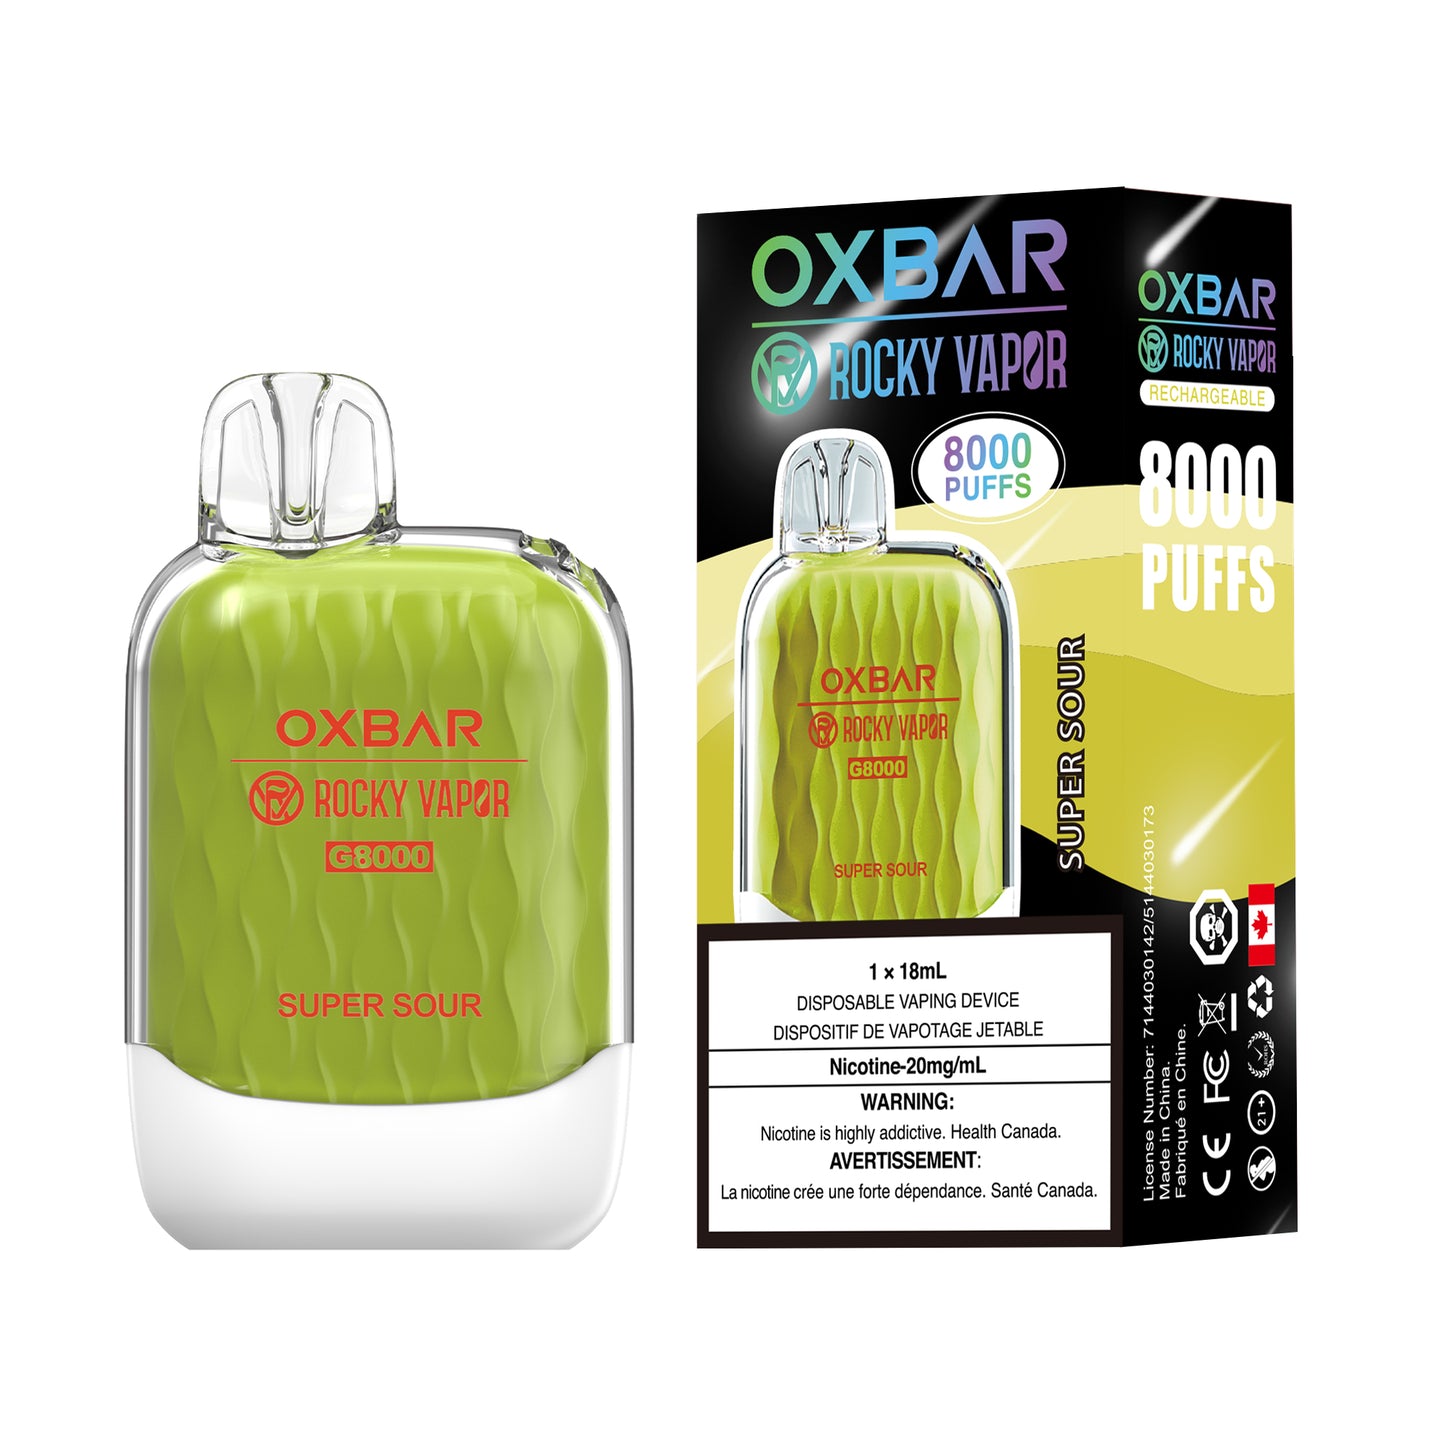 OXBAR G8000 - Super Sour (Pack of 5)